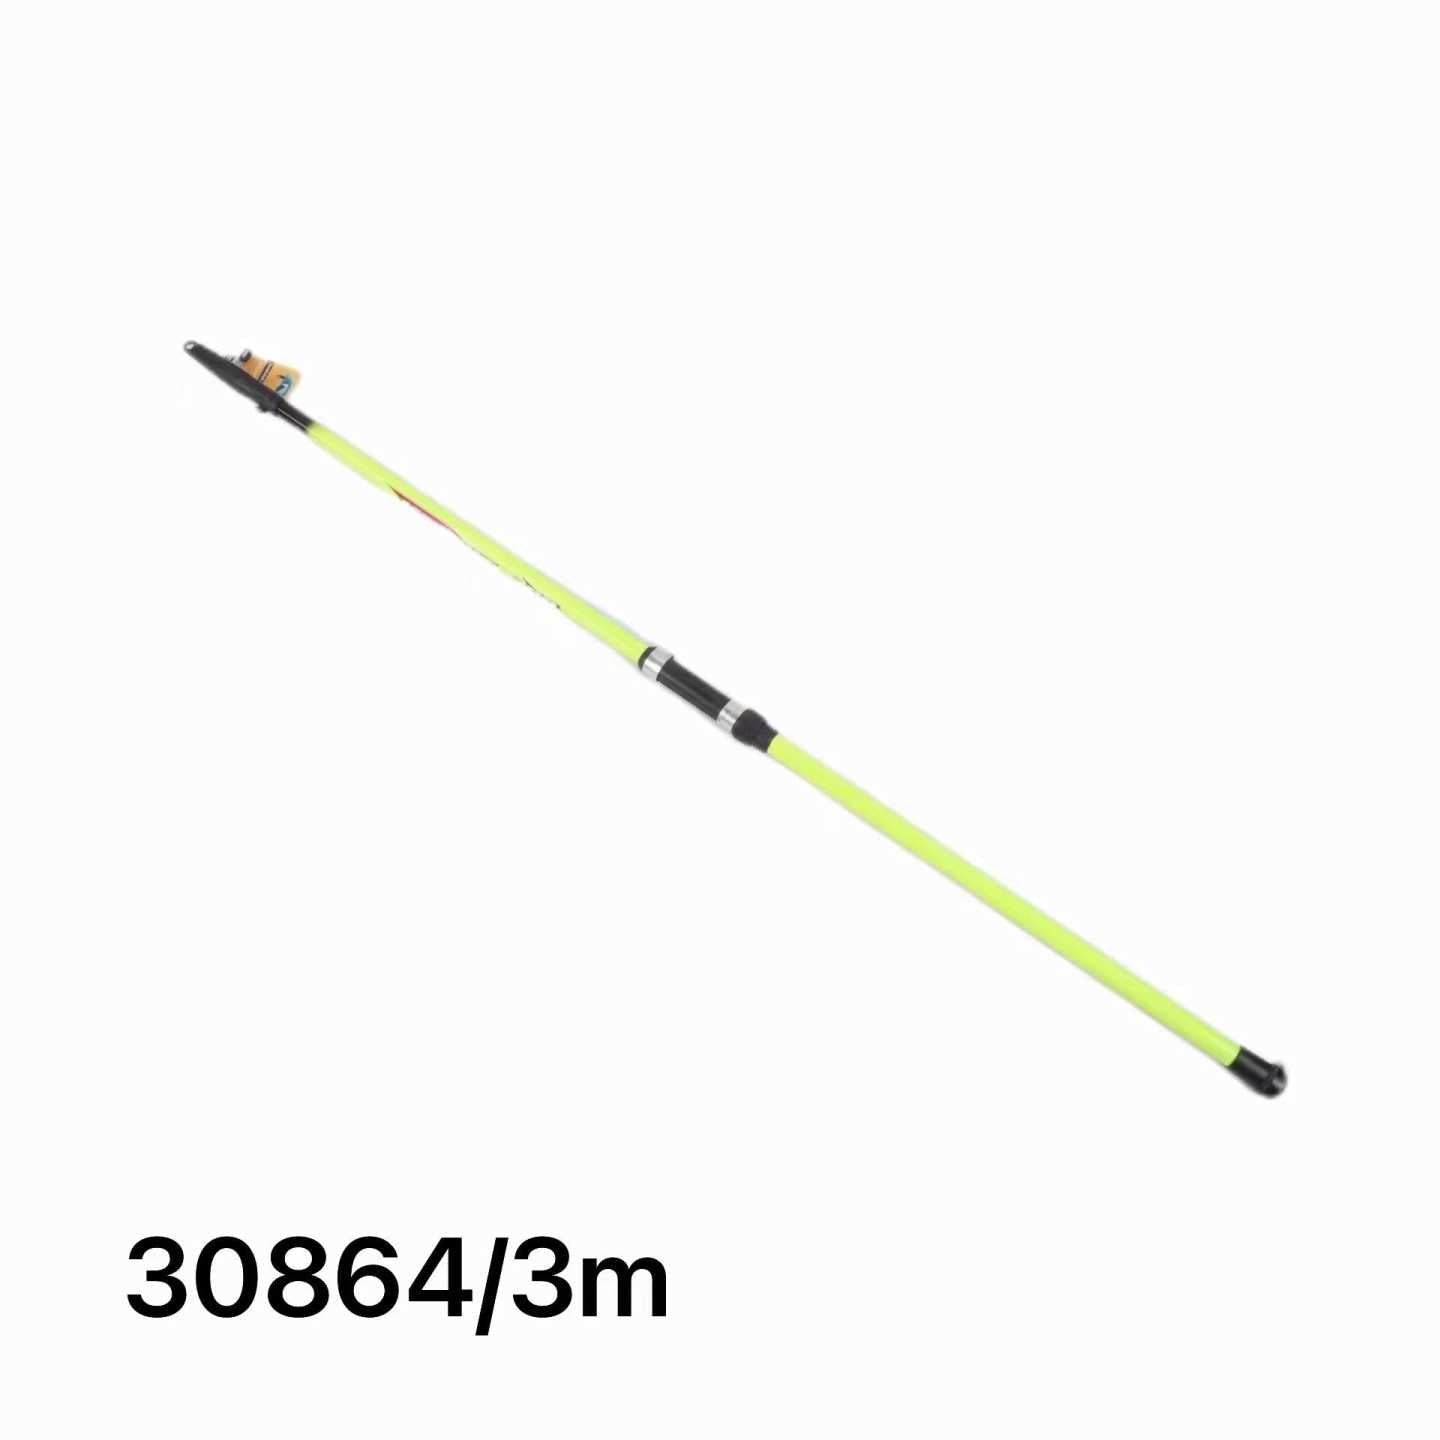 Telescopic fishing rod - 3m - 30864